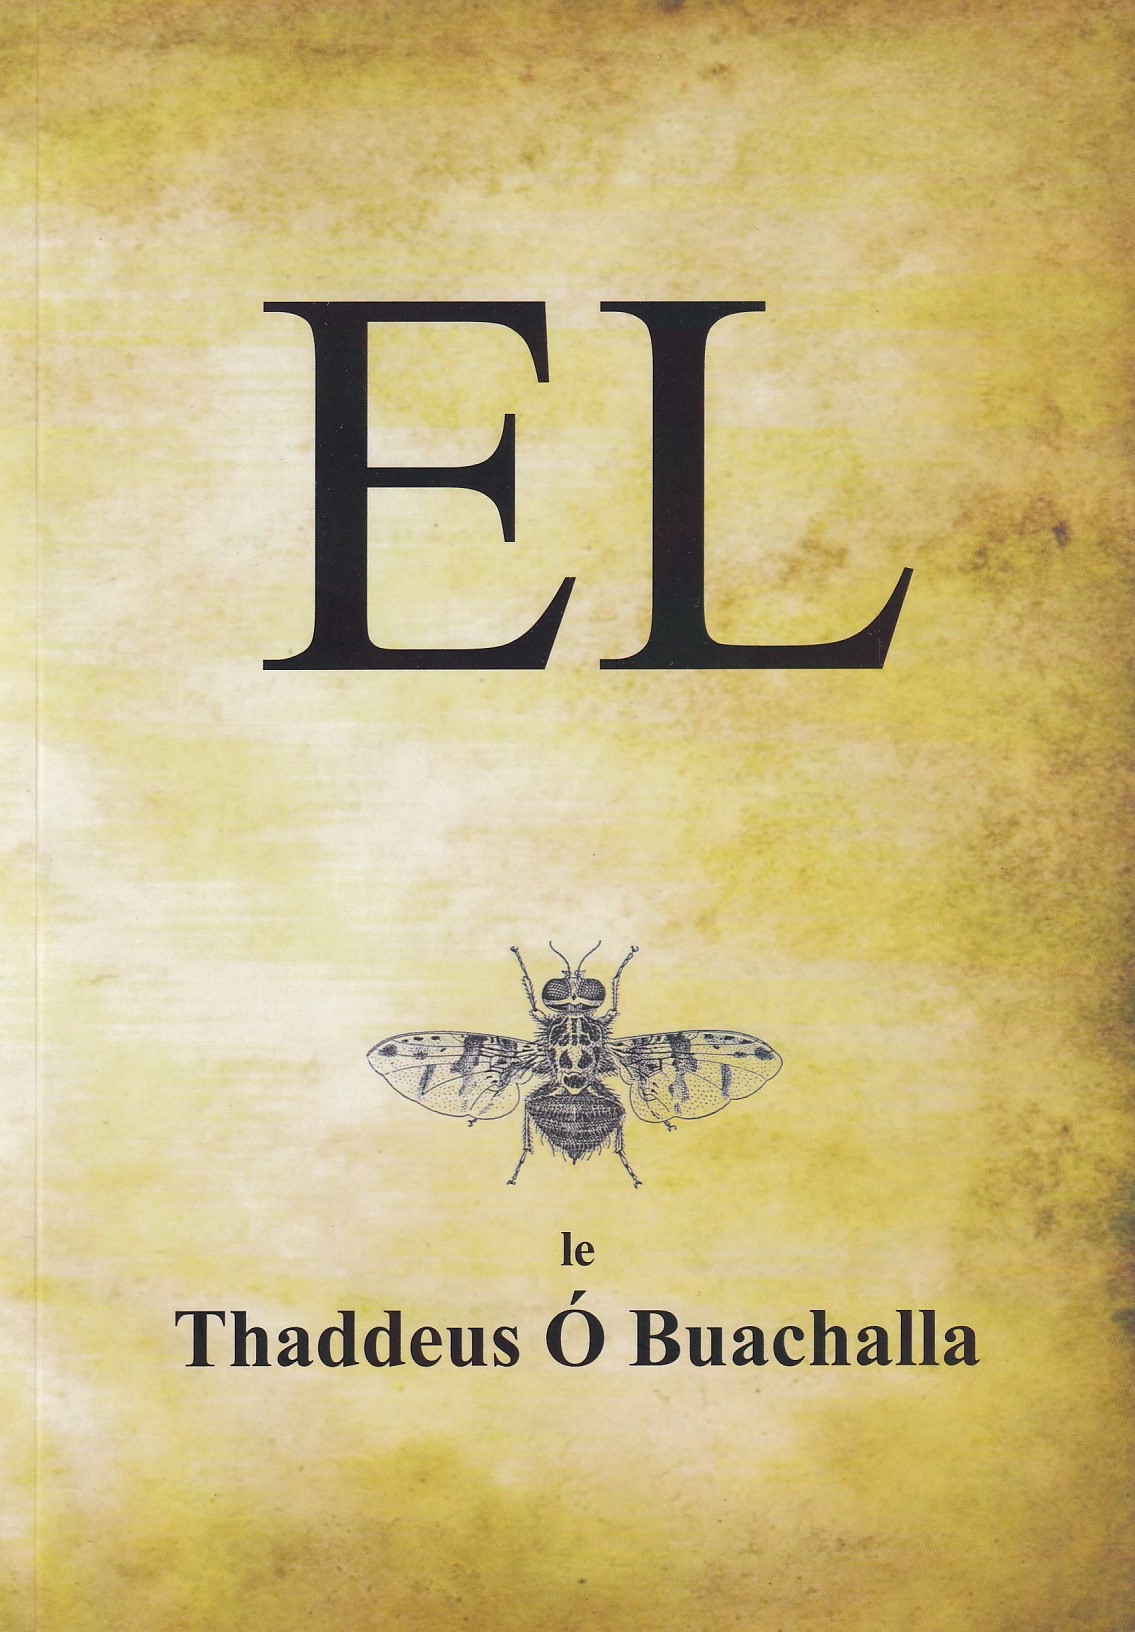 El by Thaddeus Ó Buachalla